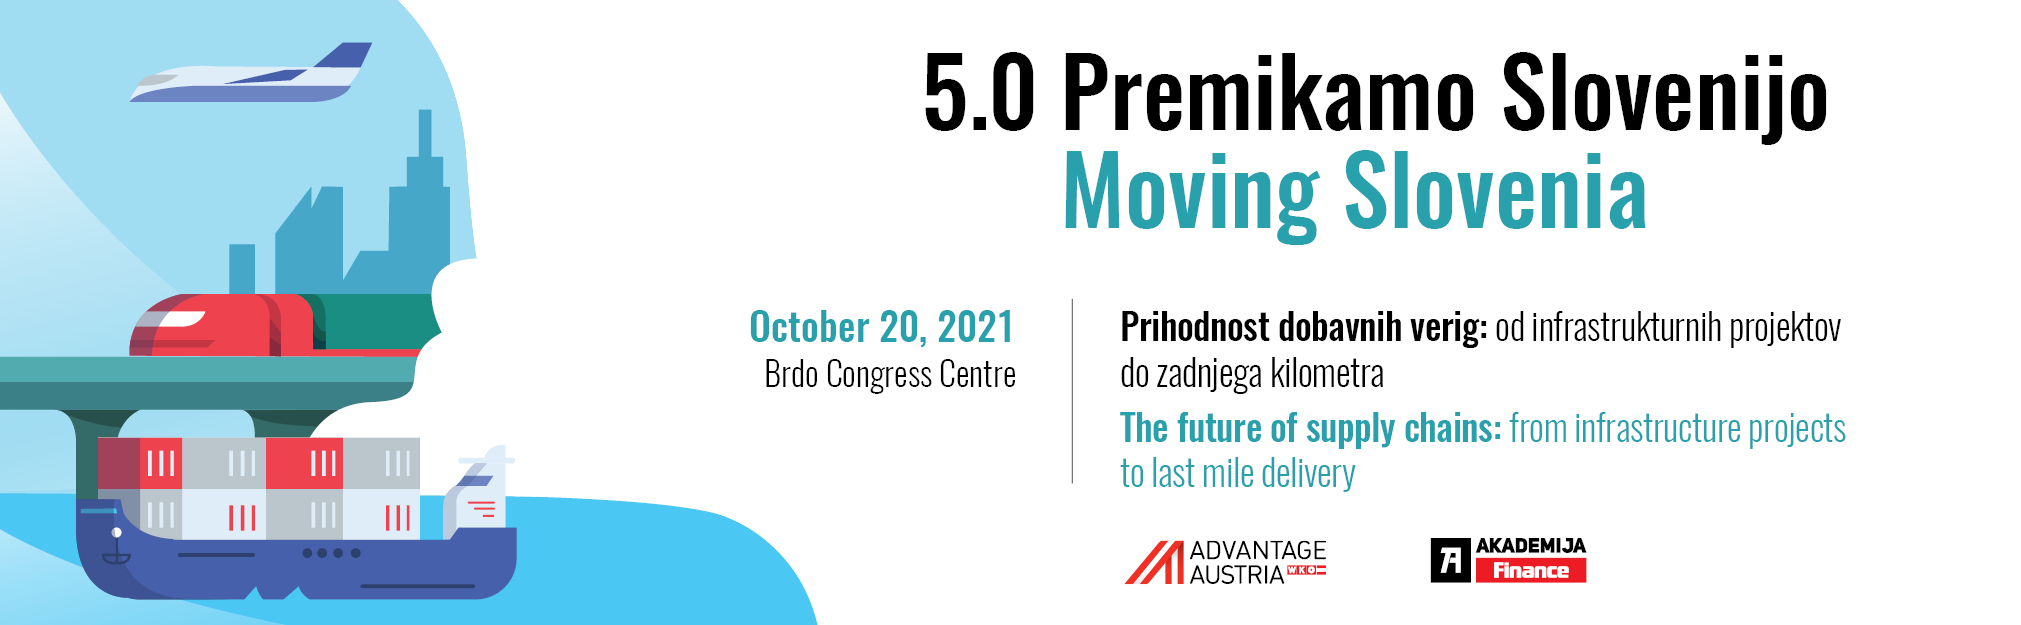 Moving Slovenia